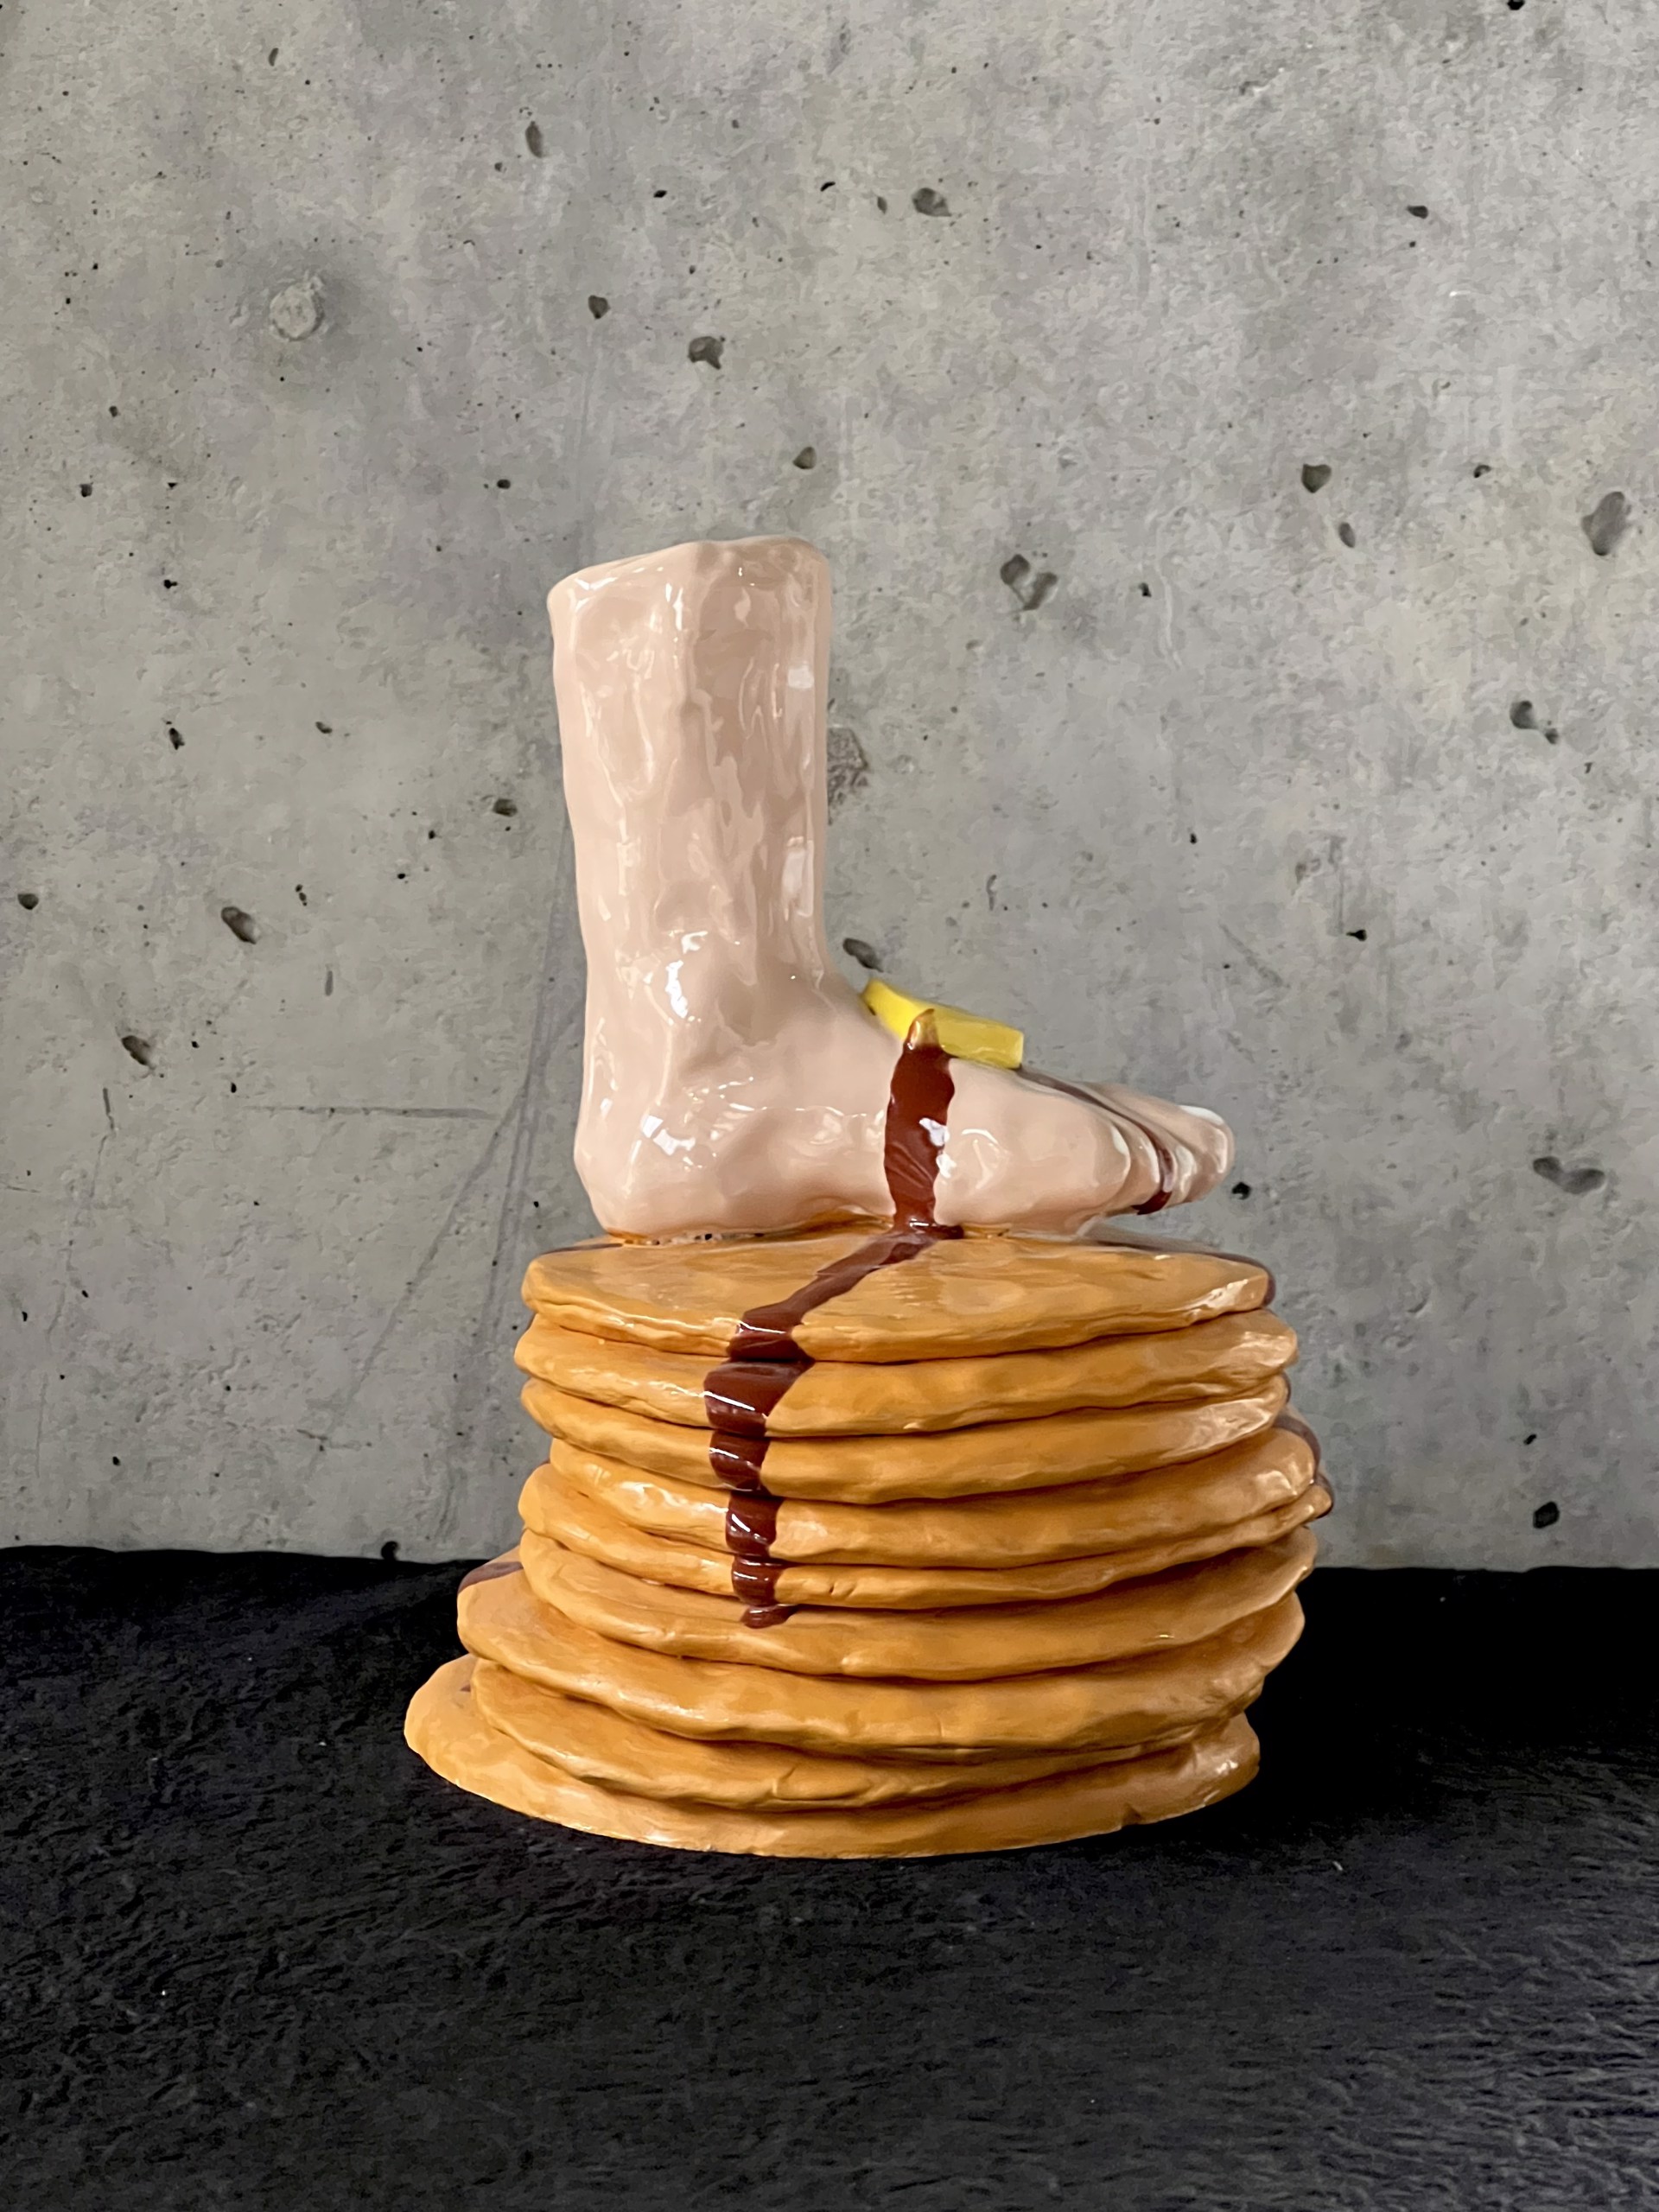 Pancake Foot by Sarah Hummel Jones